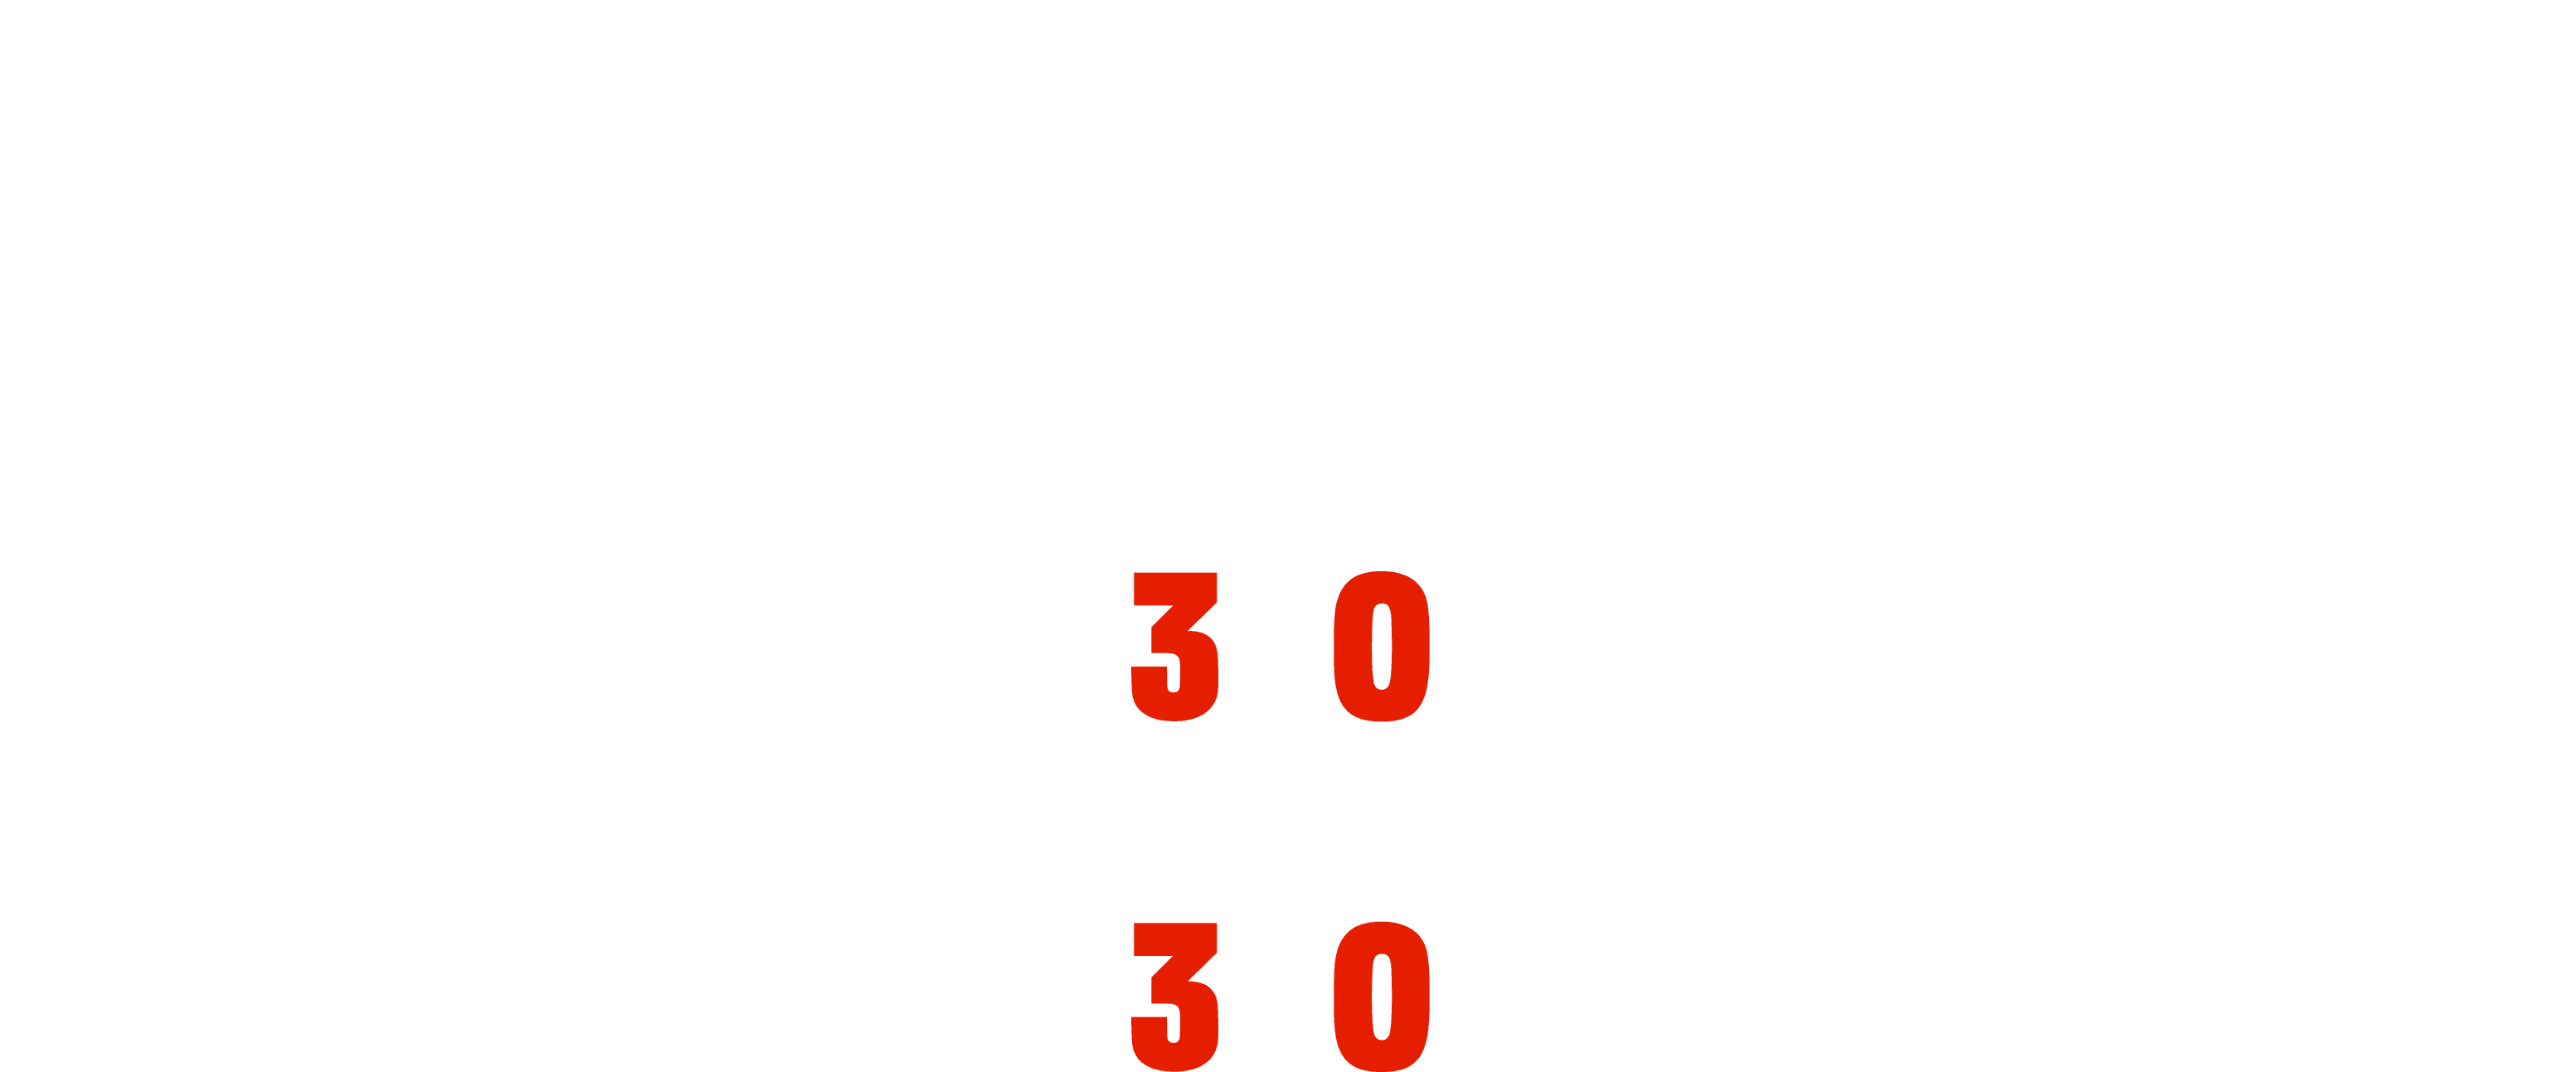 Fernando Nation logo